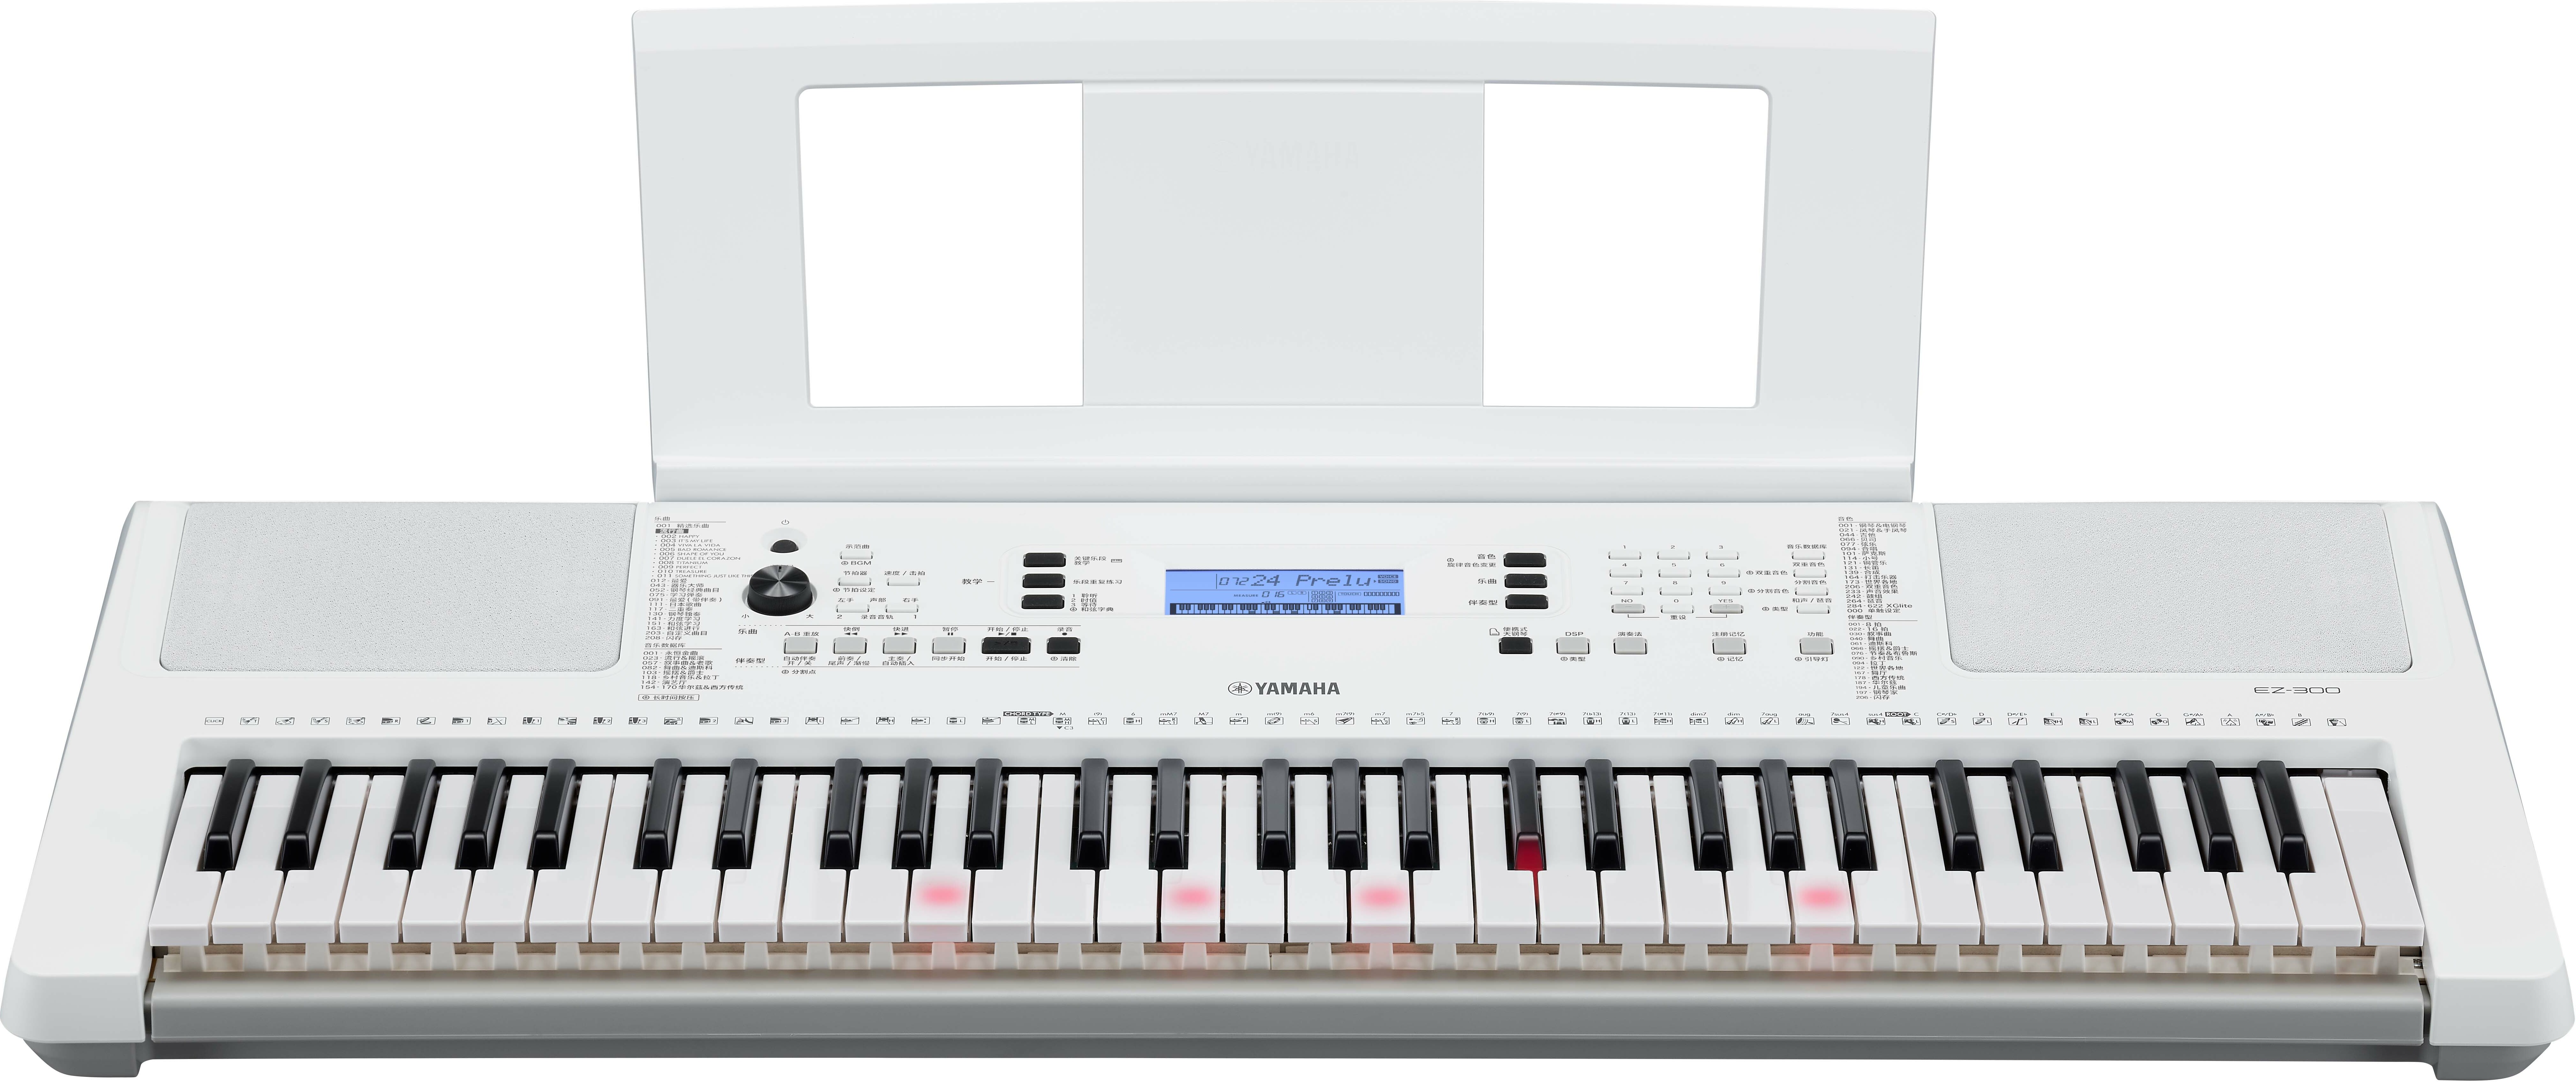 Yamaha Ez 300 - Entertainer Keyboard - Main picture